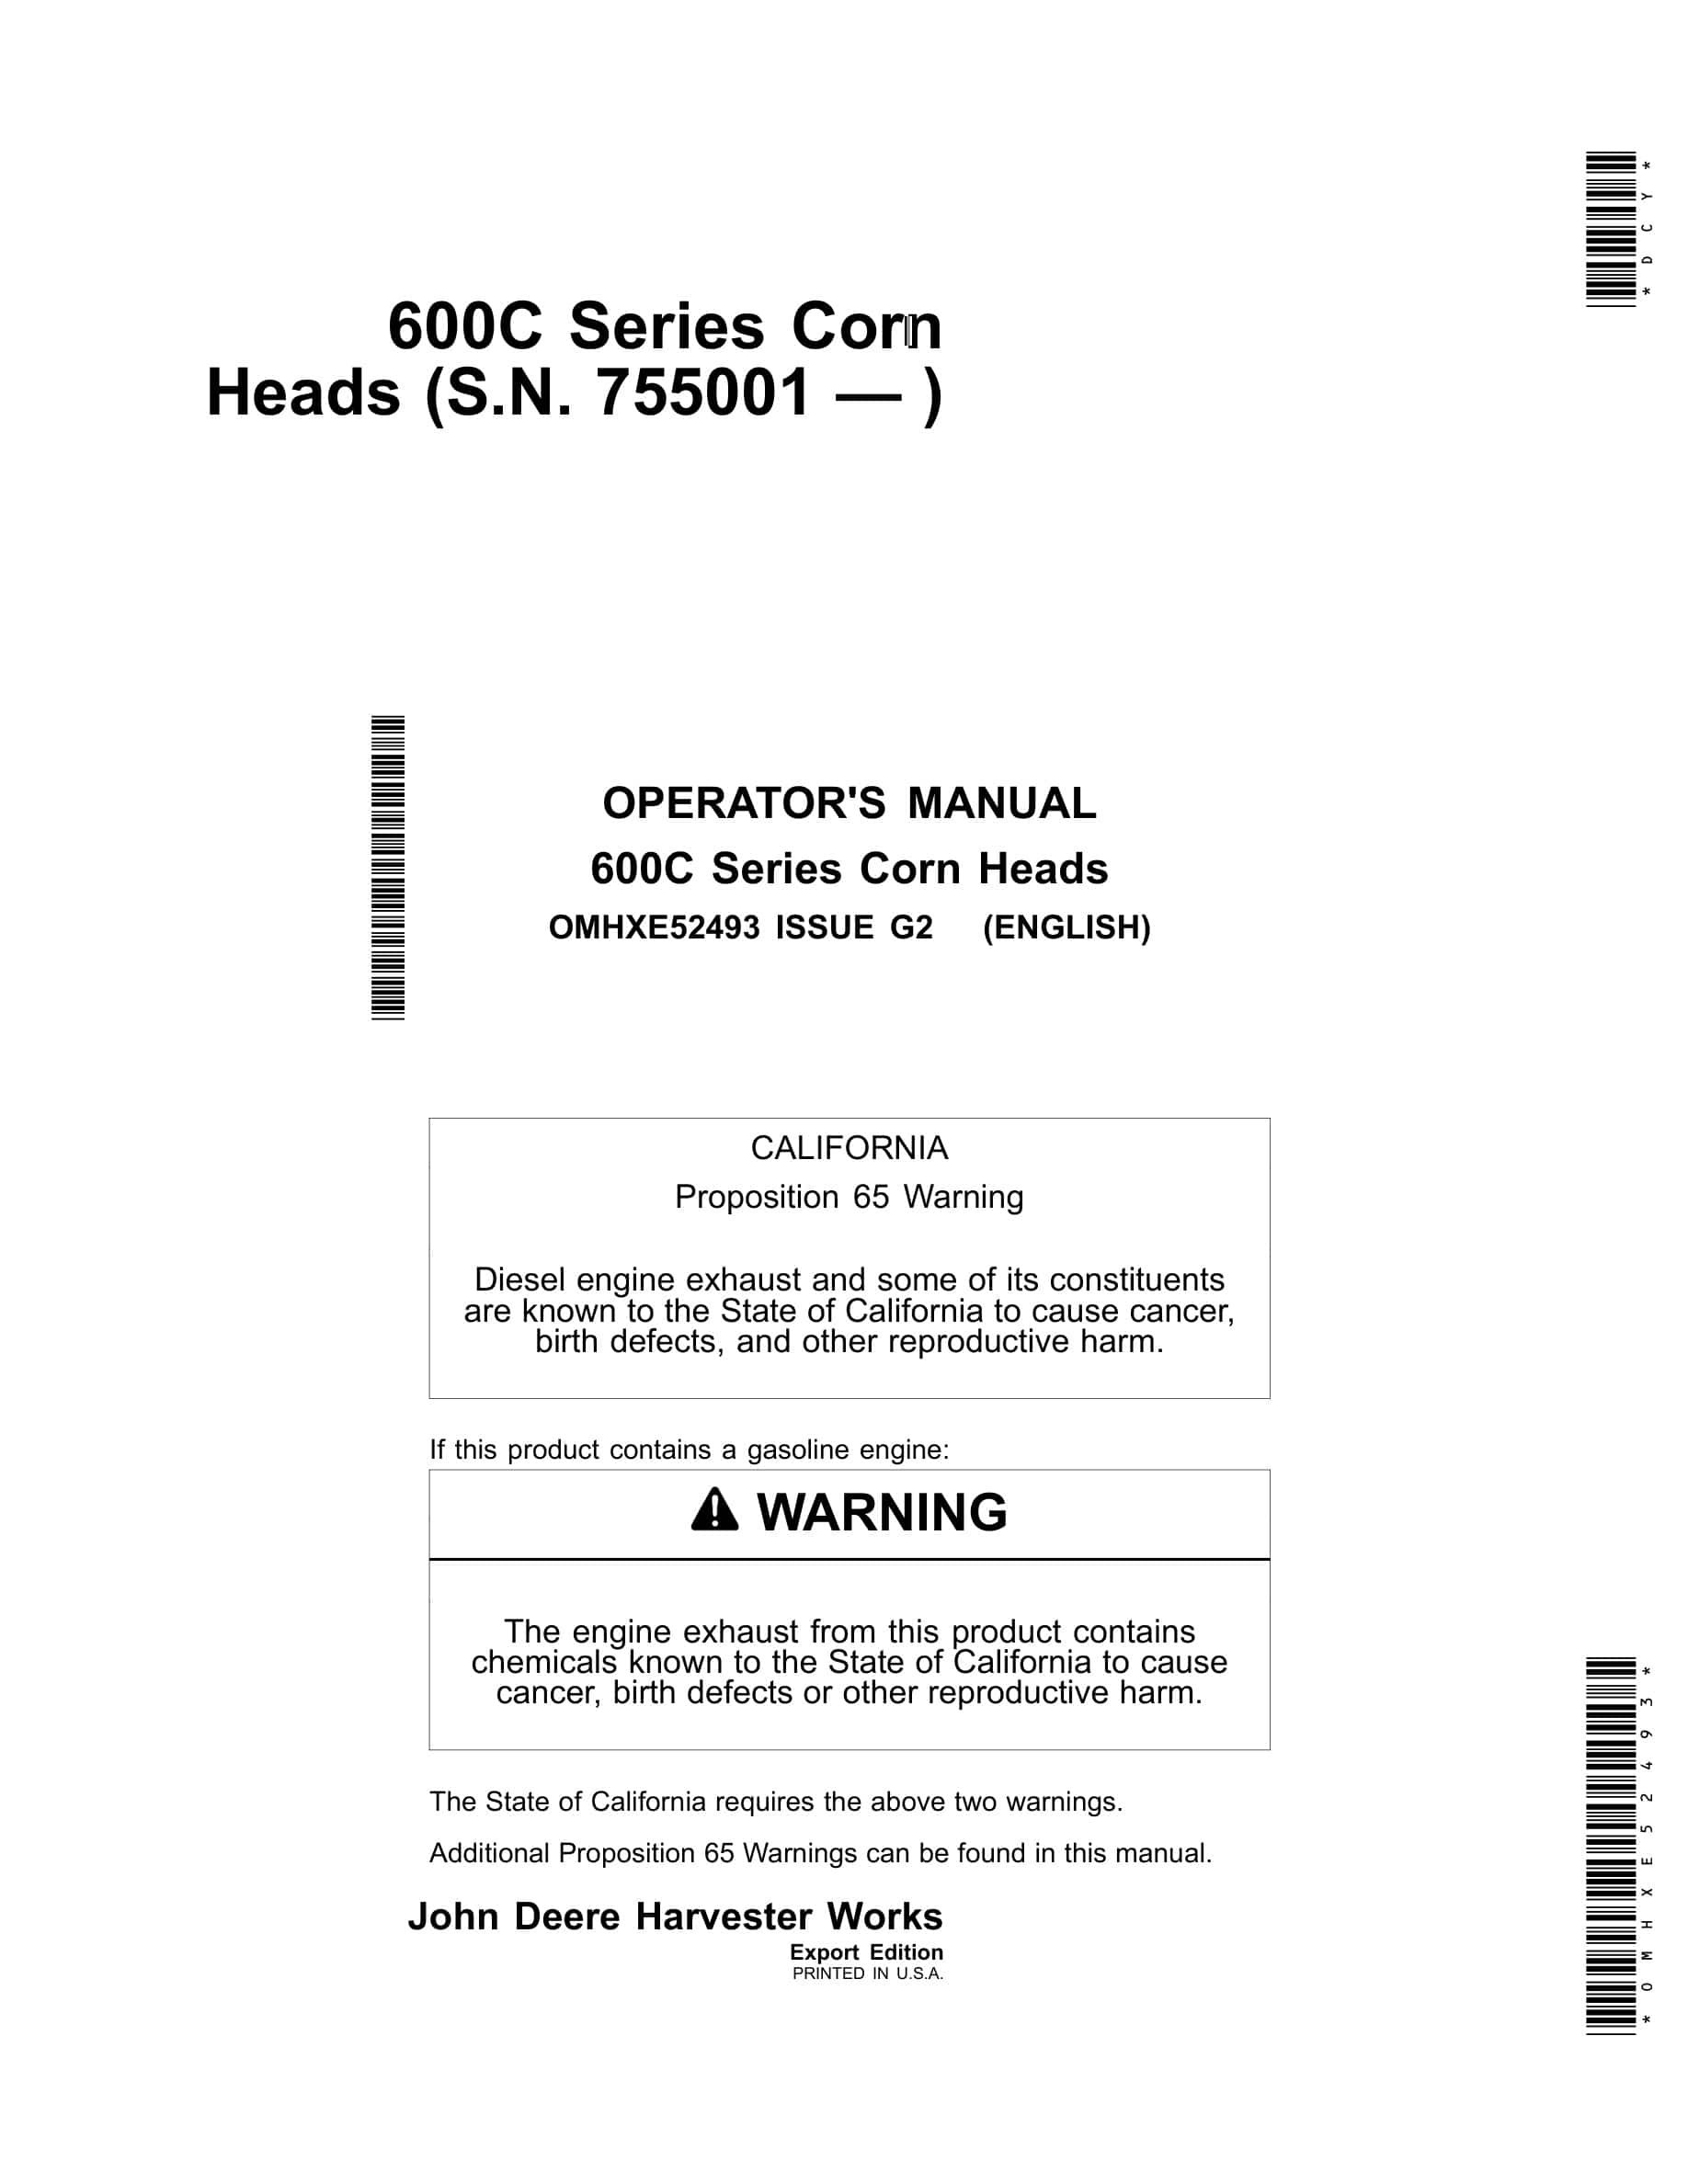 John Deere 600C Series Corn Heads Operator Manual OMHXE52493-1